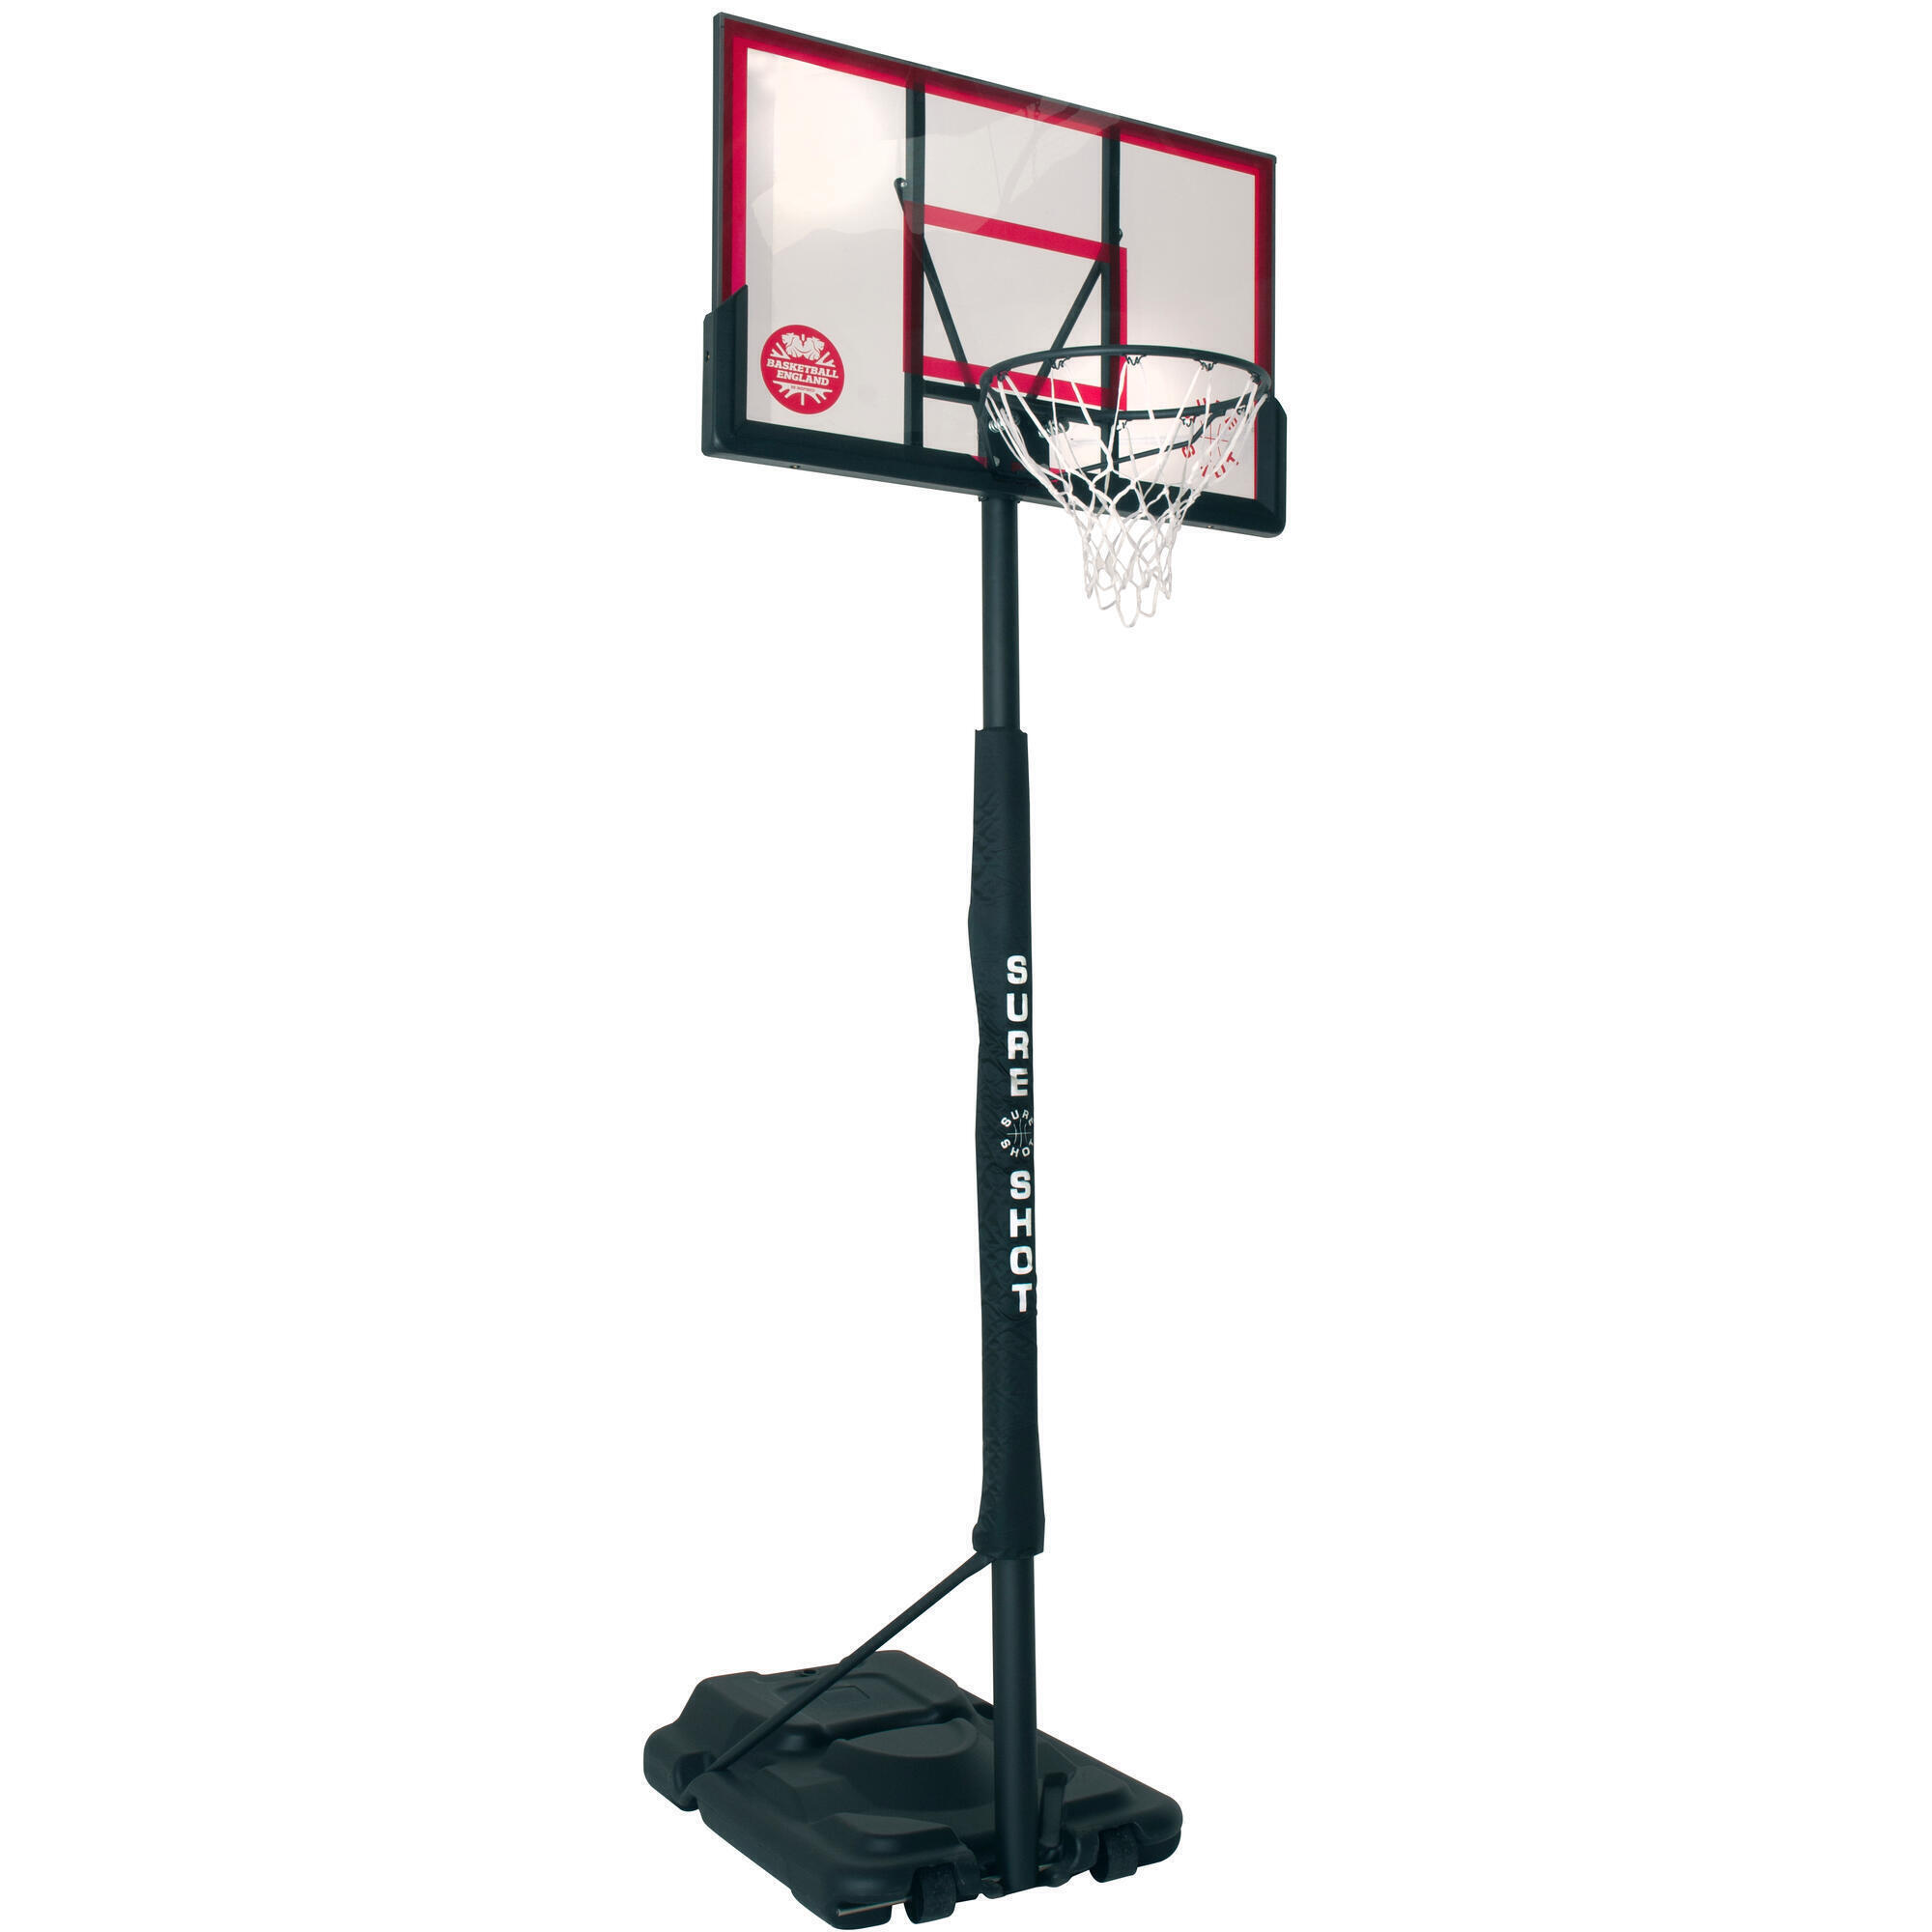 SURE SHOT Sure Shot Telescopic Basketball Hoop with an Acrylic Backboard